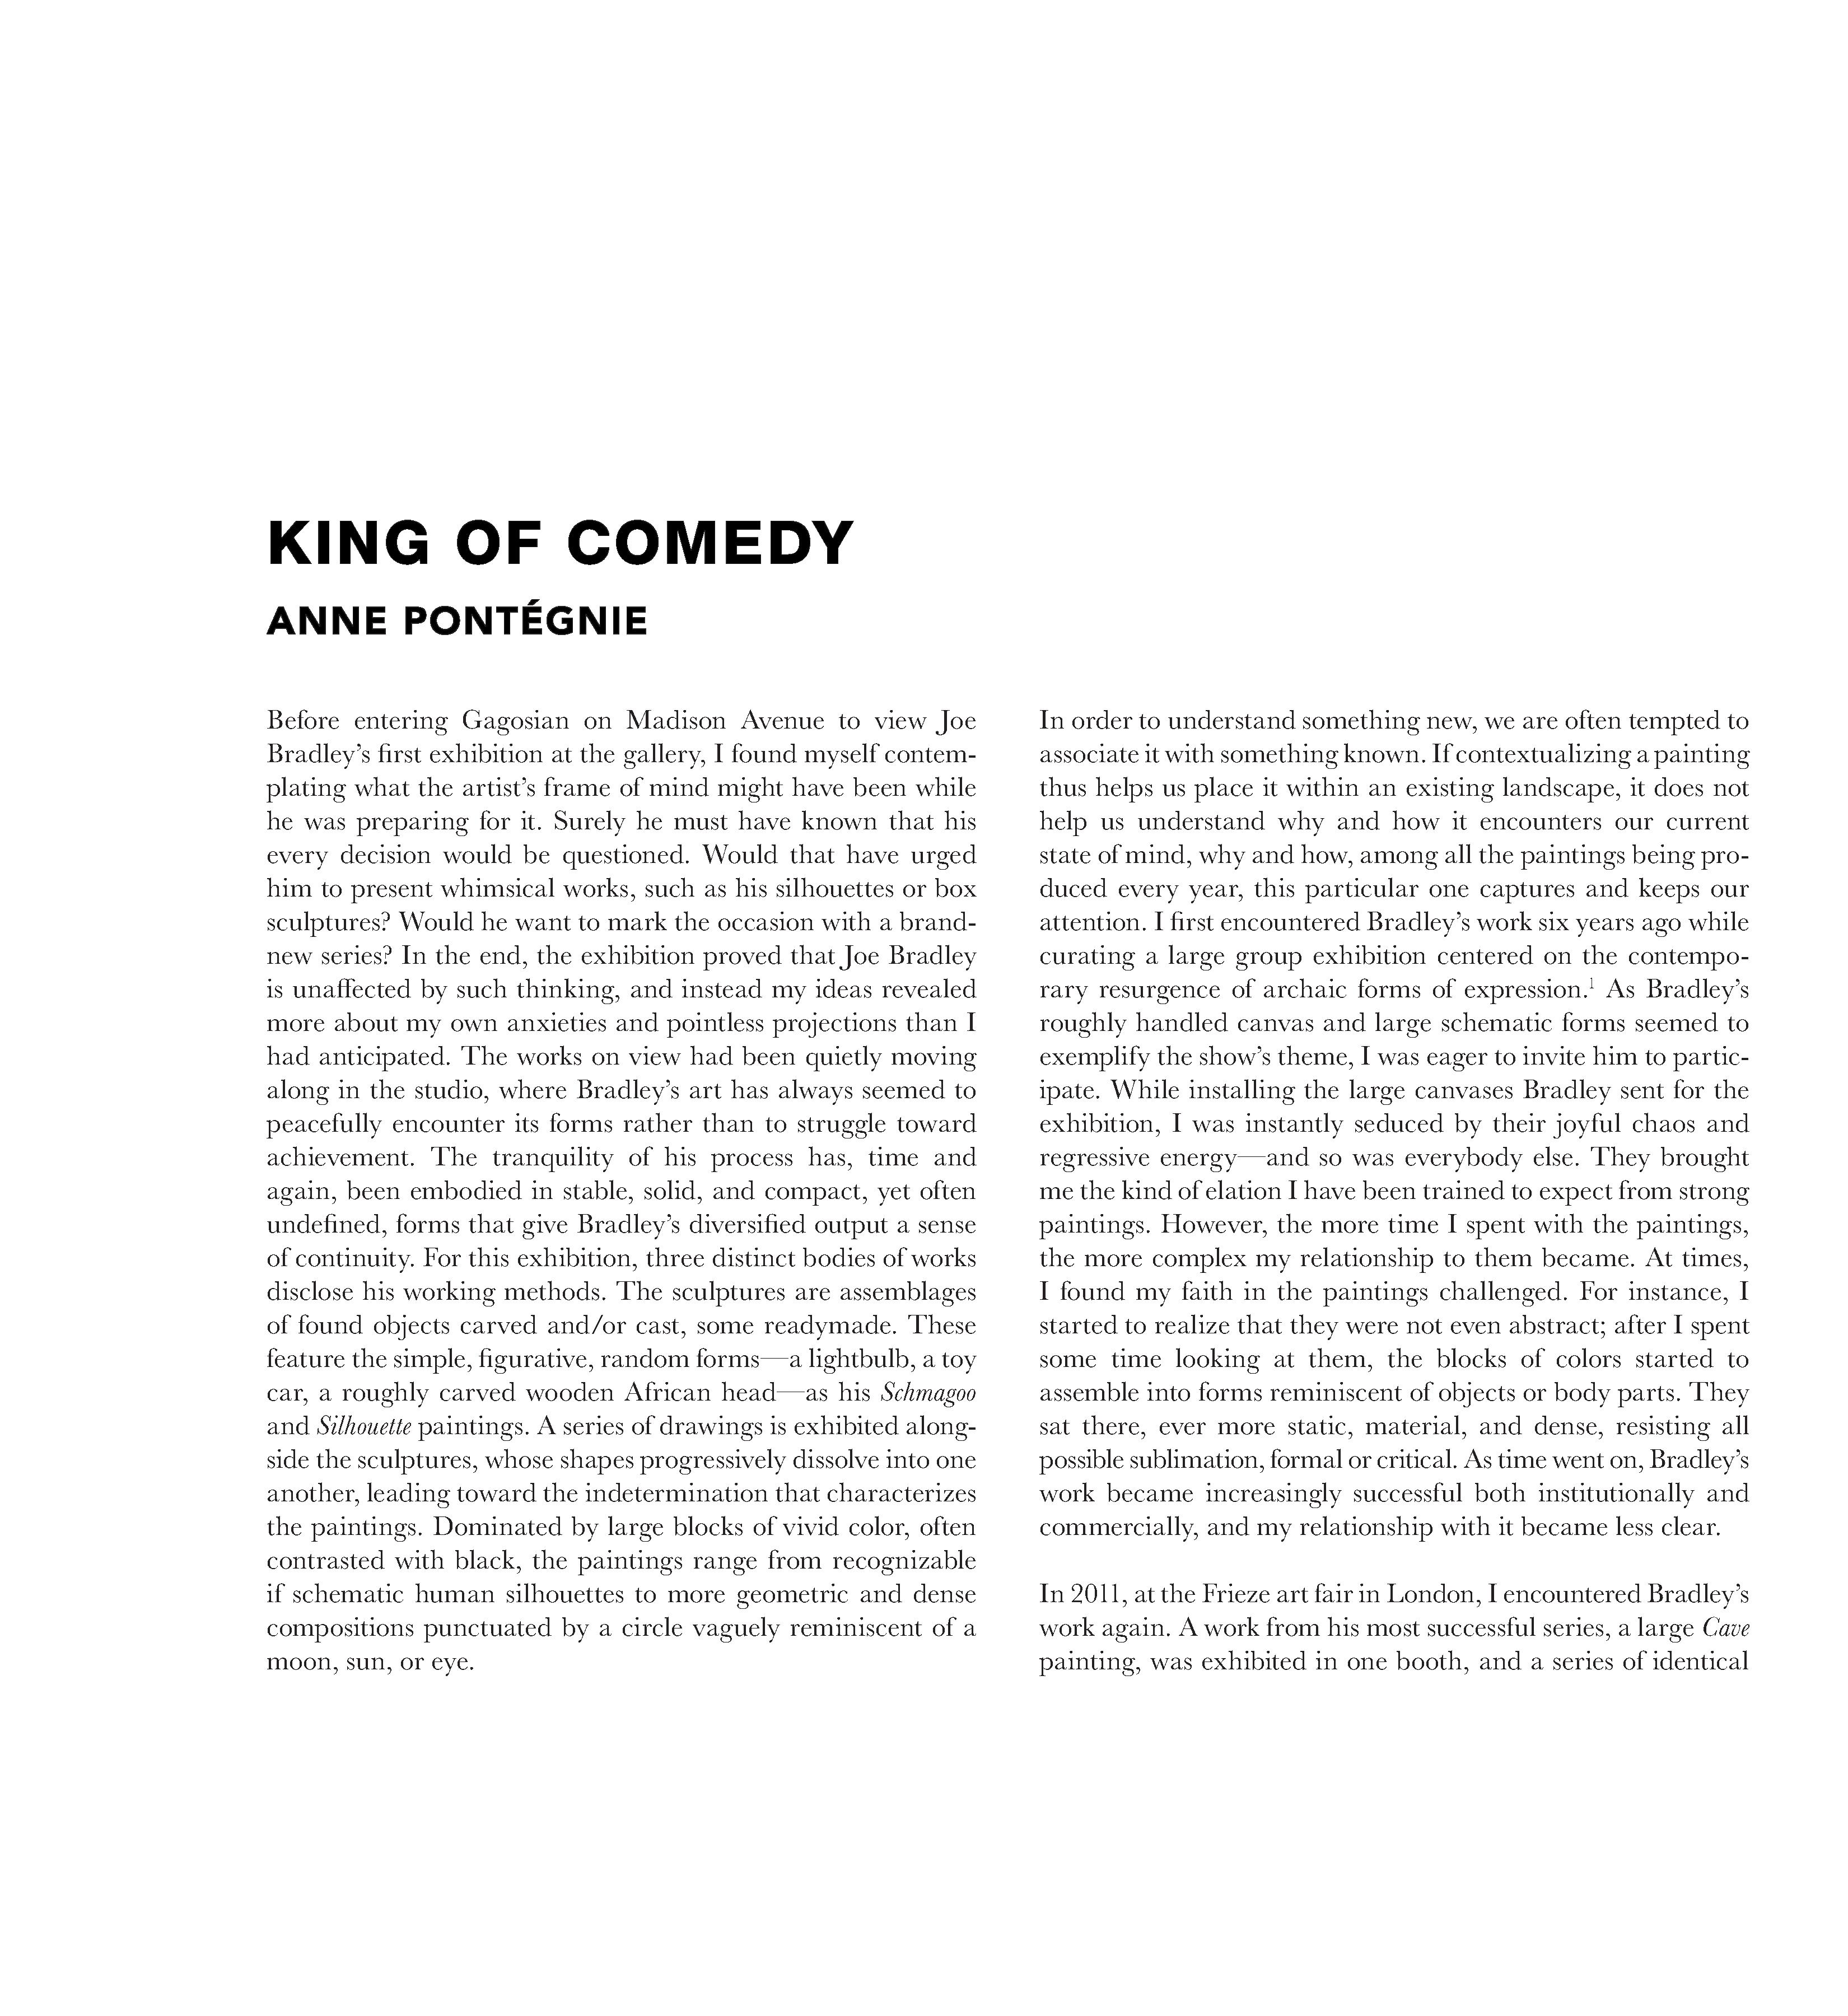 Anne Pontégnie, "King of Comedy" in: Joe Bradley. Krasdale. New York: Gagosian, 2017.